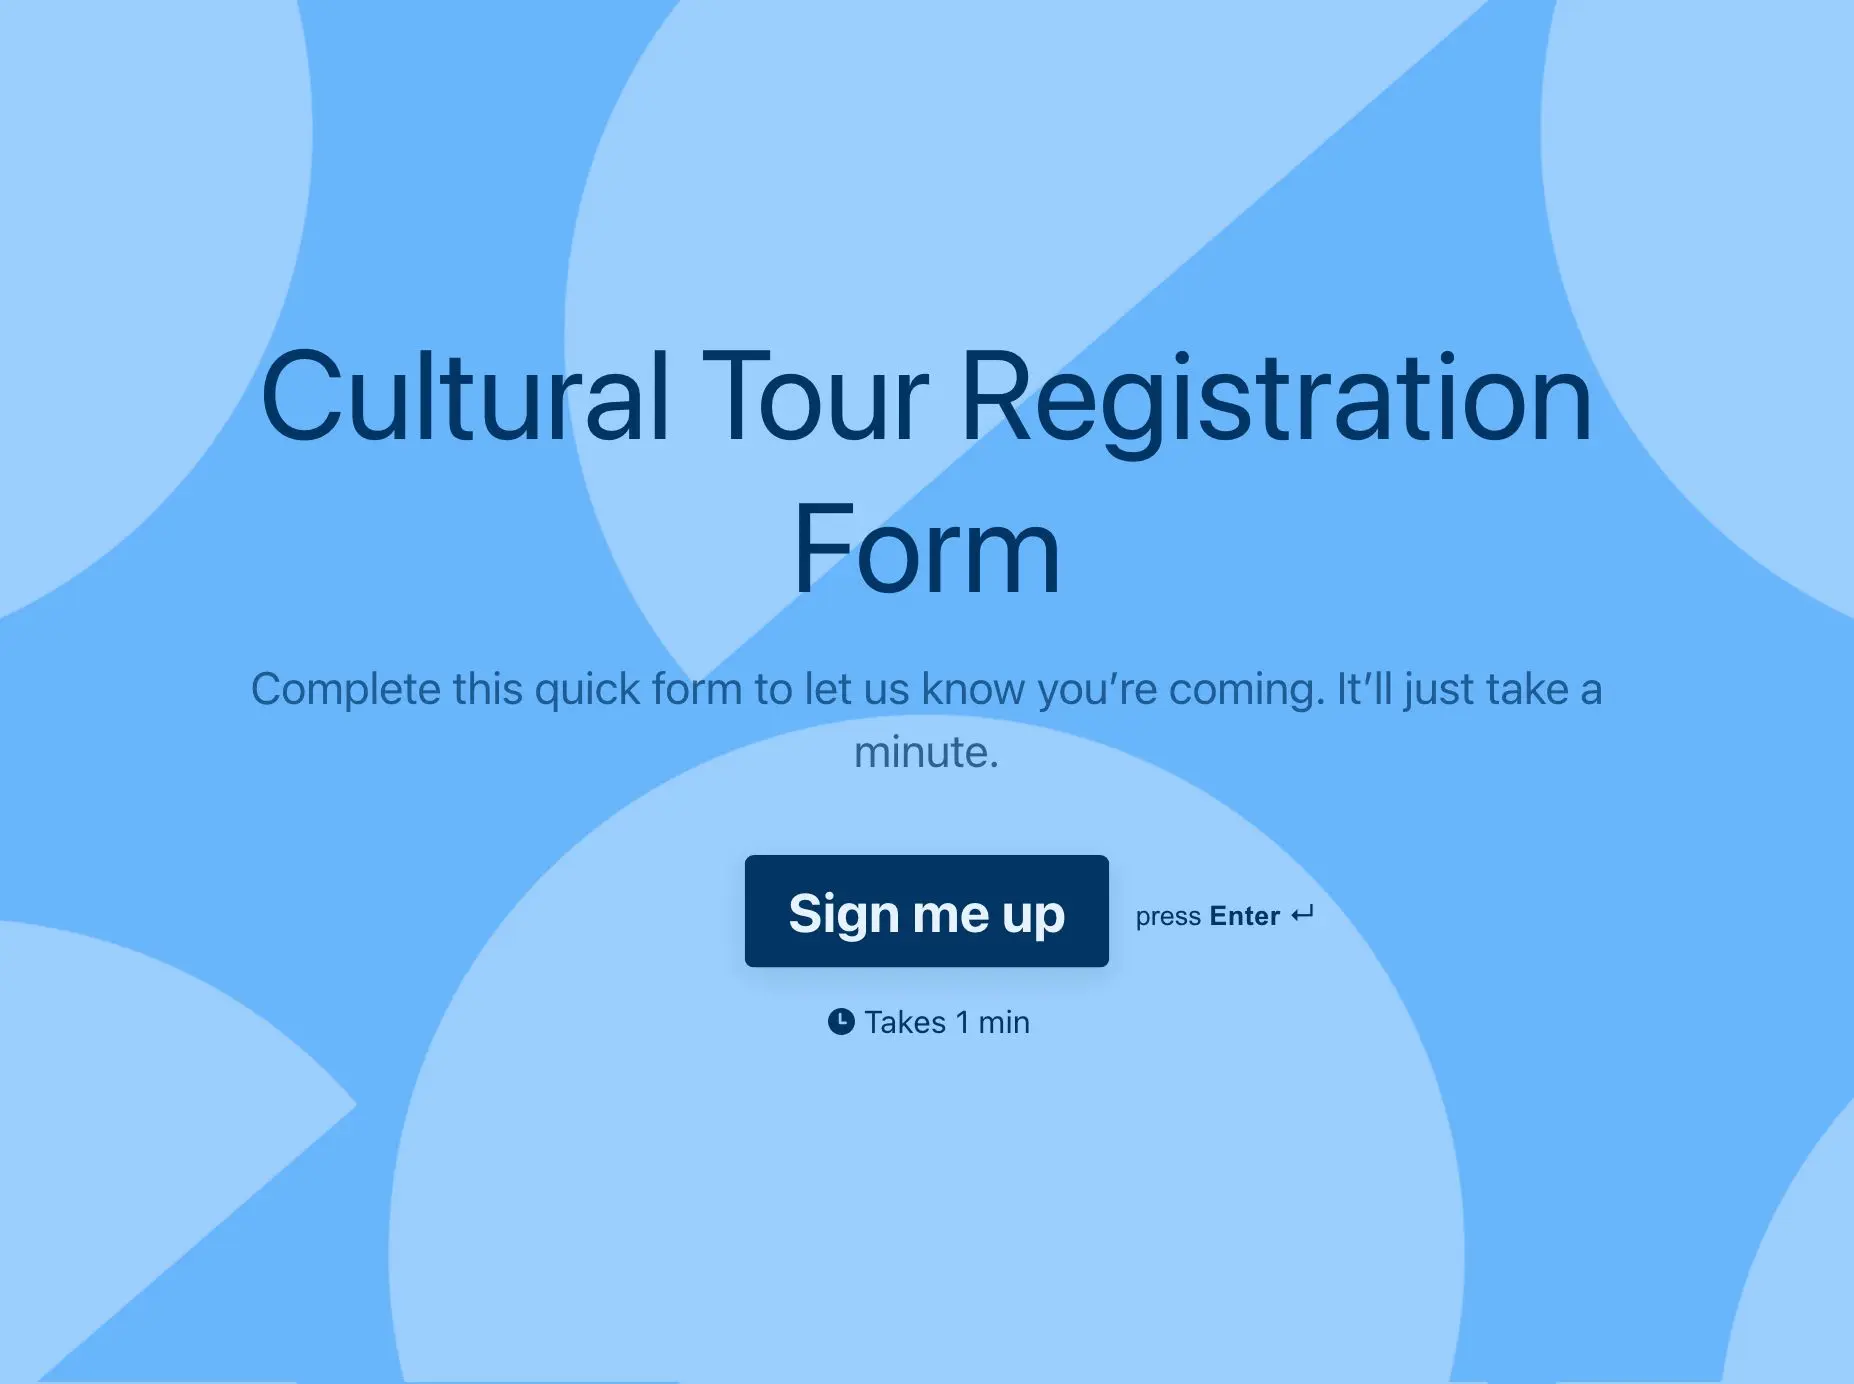 Cultural Tour Registration Form Template Hero